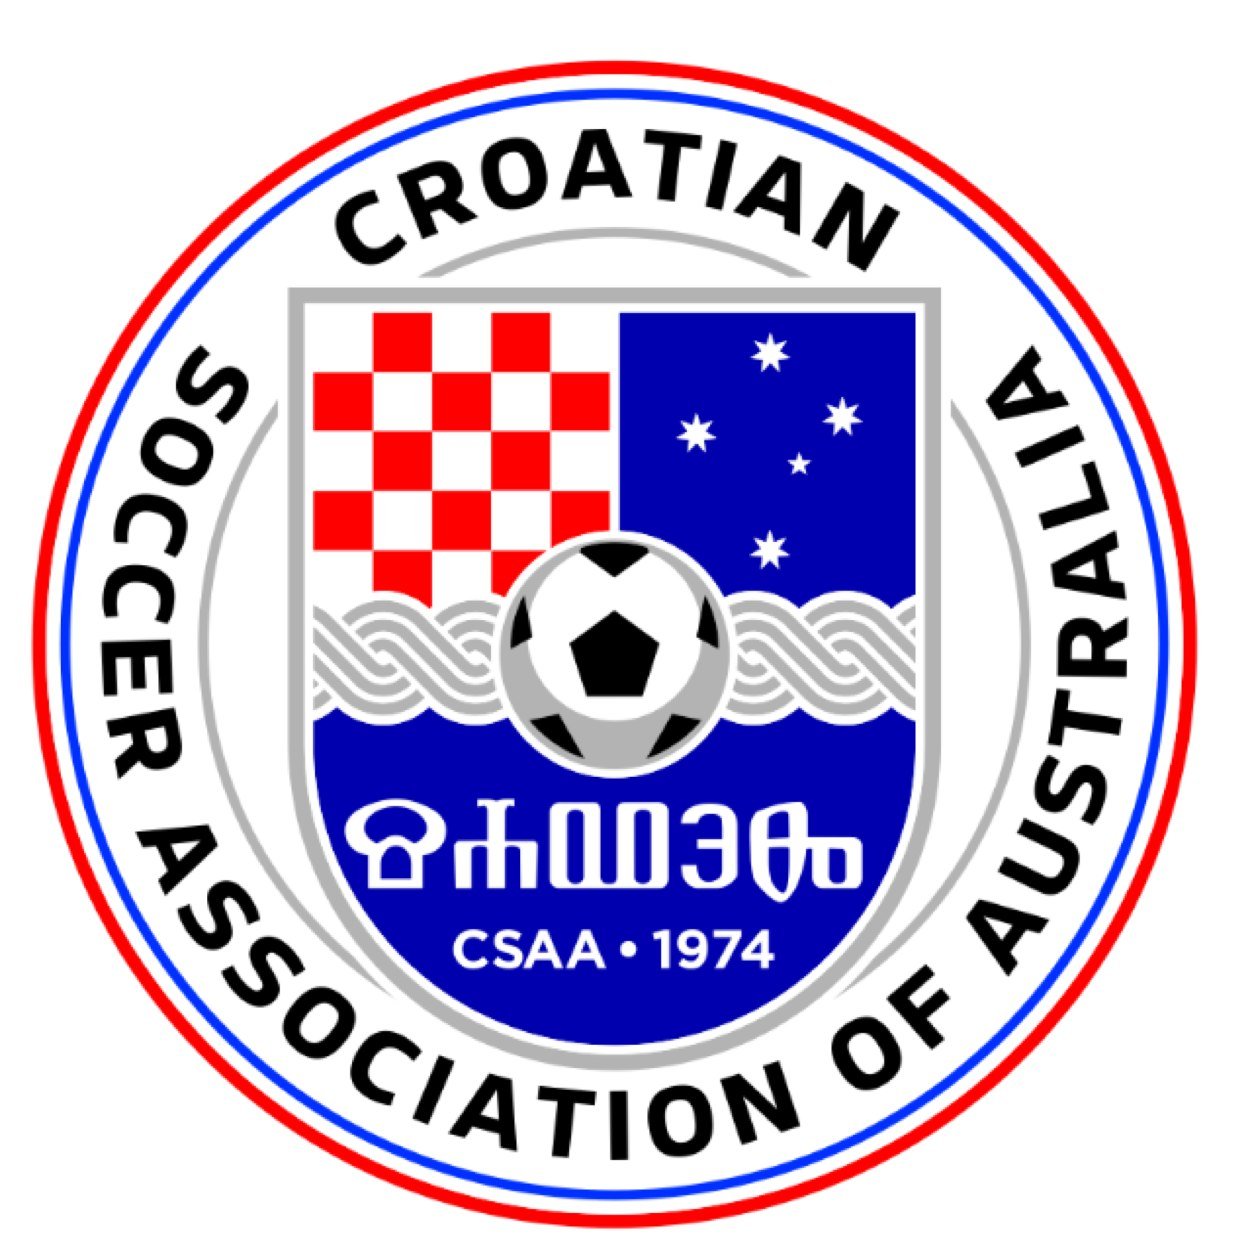 Official Twitter account of the Croatian Soccer Assoc. of Australia - est.1974 (Hrvatski Nogometni Savez Australije - osvojan 1974).